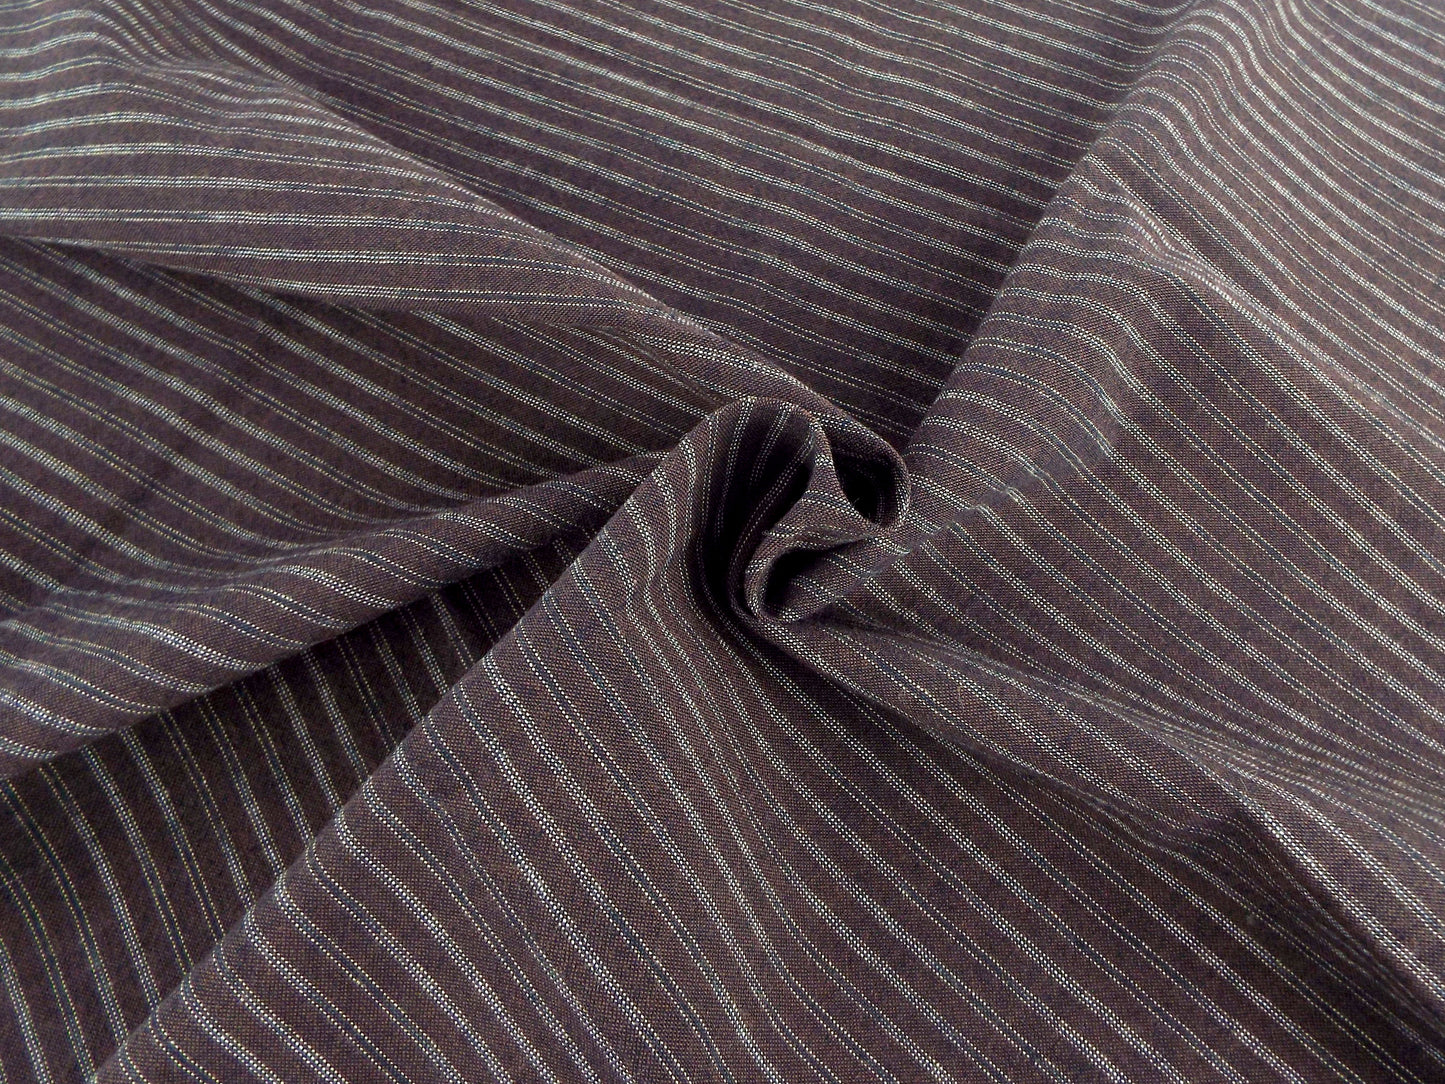 Kameda striped cotton fabric ordinary ground # 24 ABDG 4 patterns